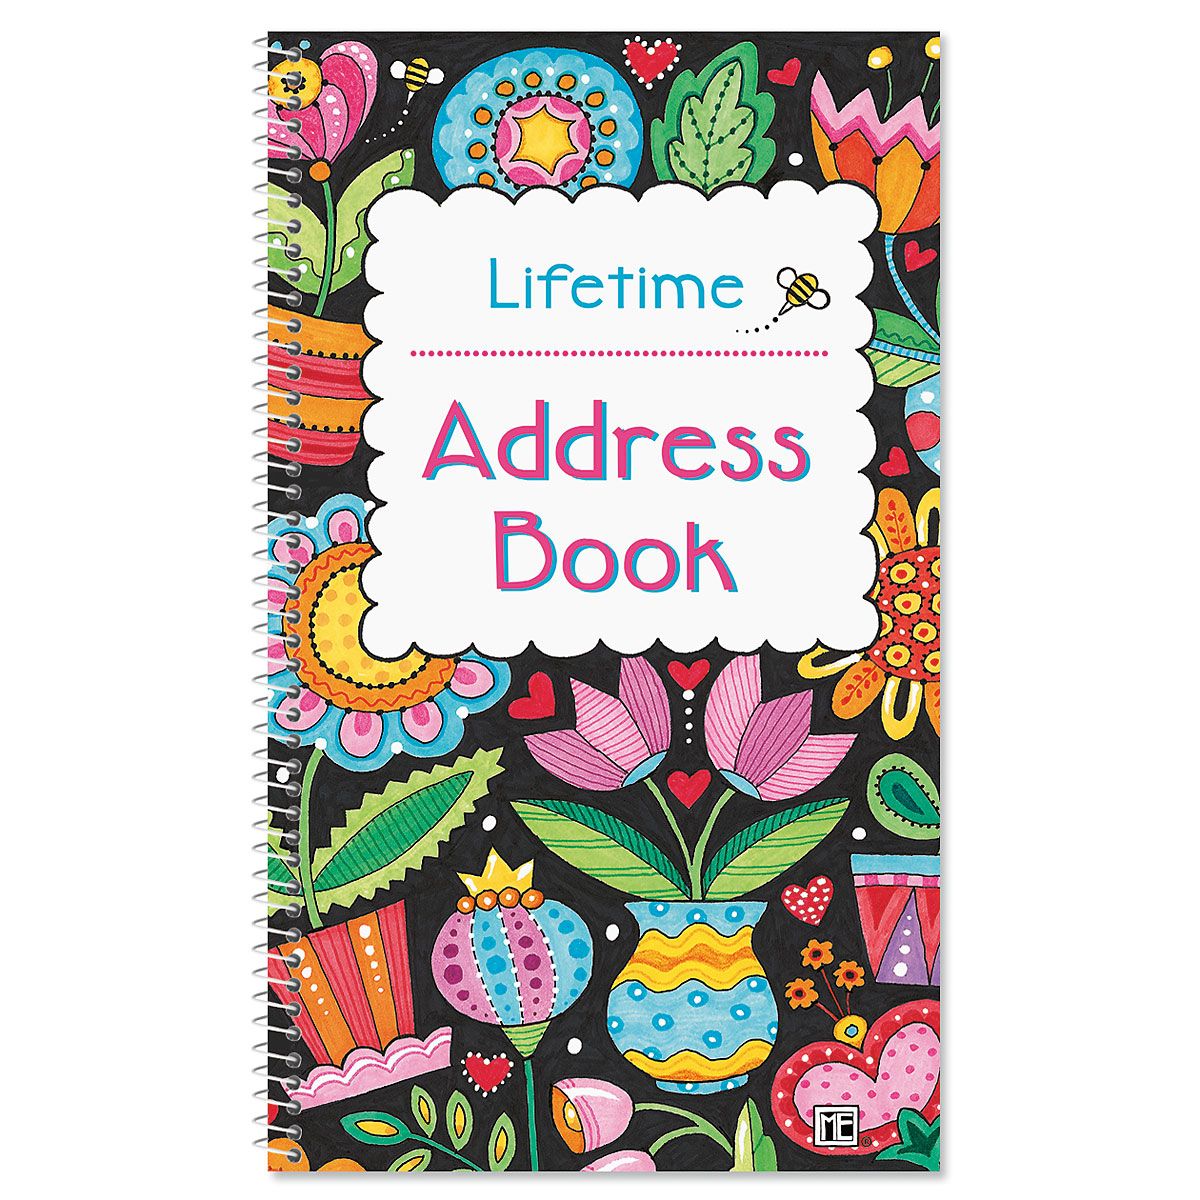 Lifetime Address Book